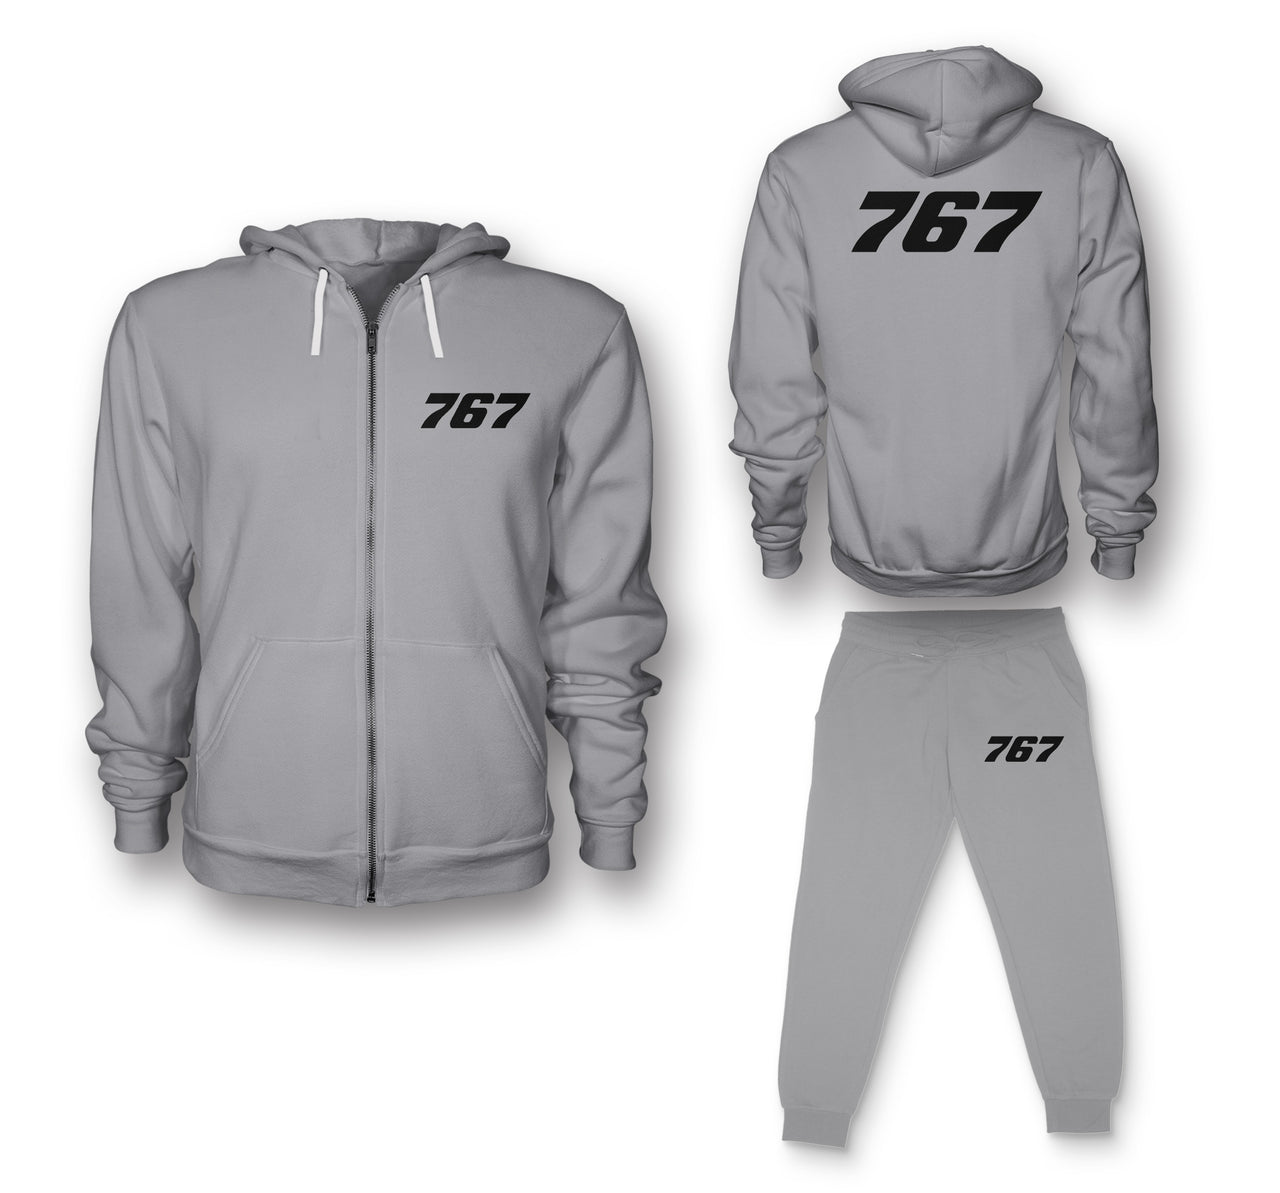 767 Flat Text Designed Zipped Hoodies & Sweatpants Set